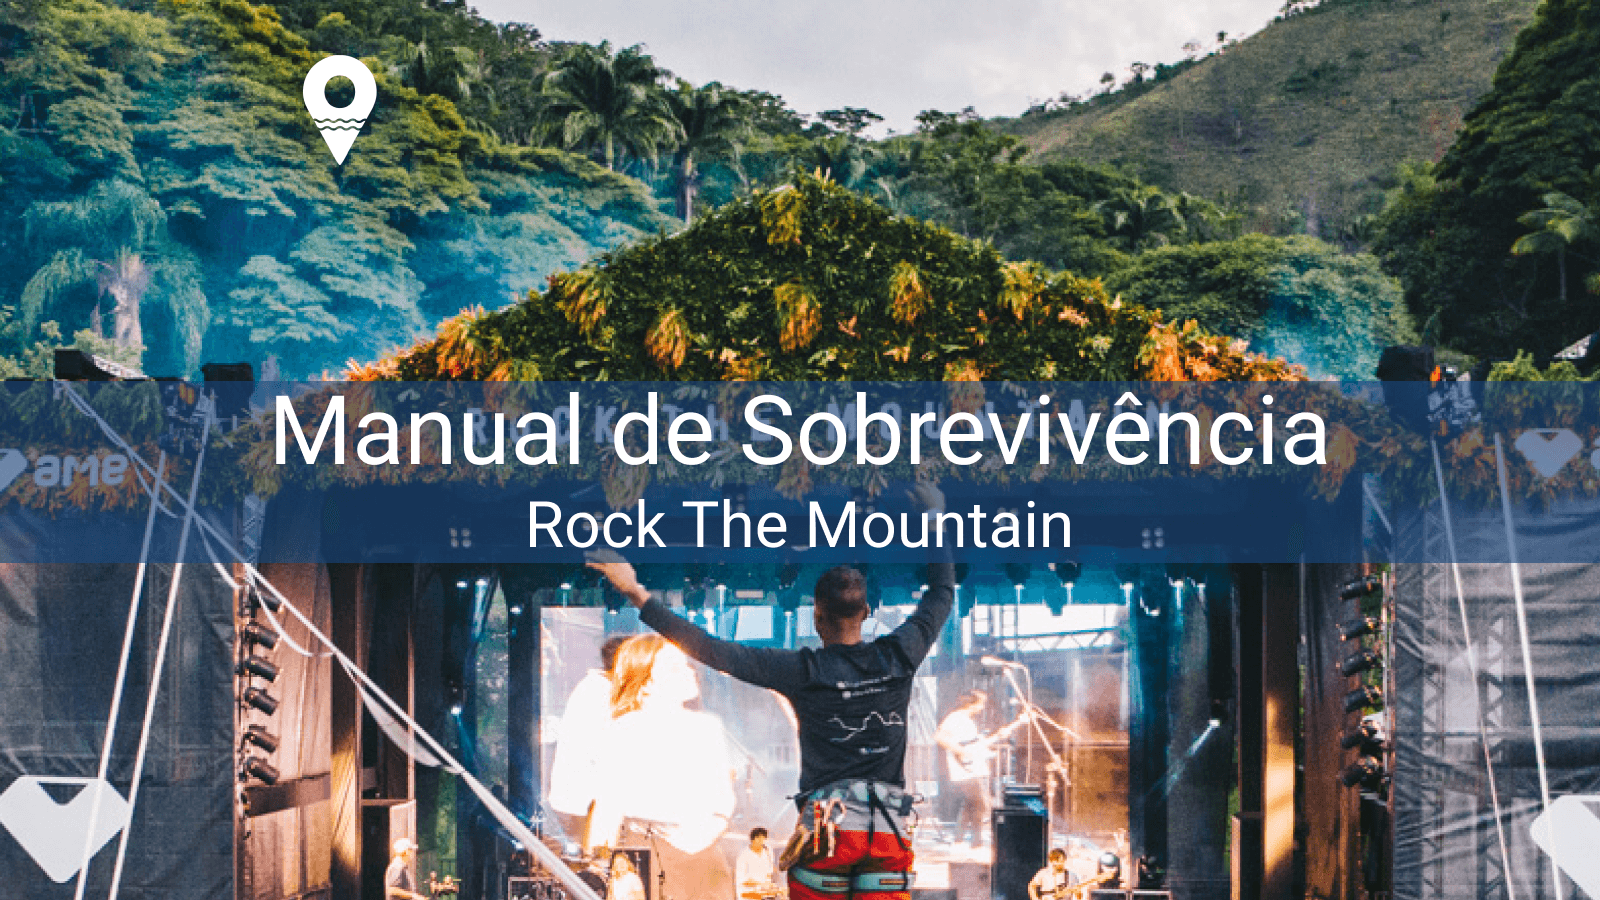 Rock The Mountain Survival Guide!